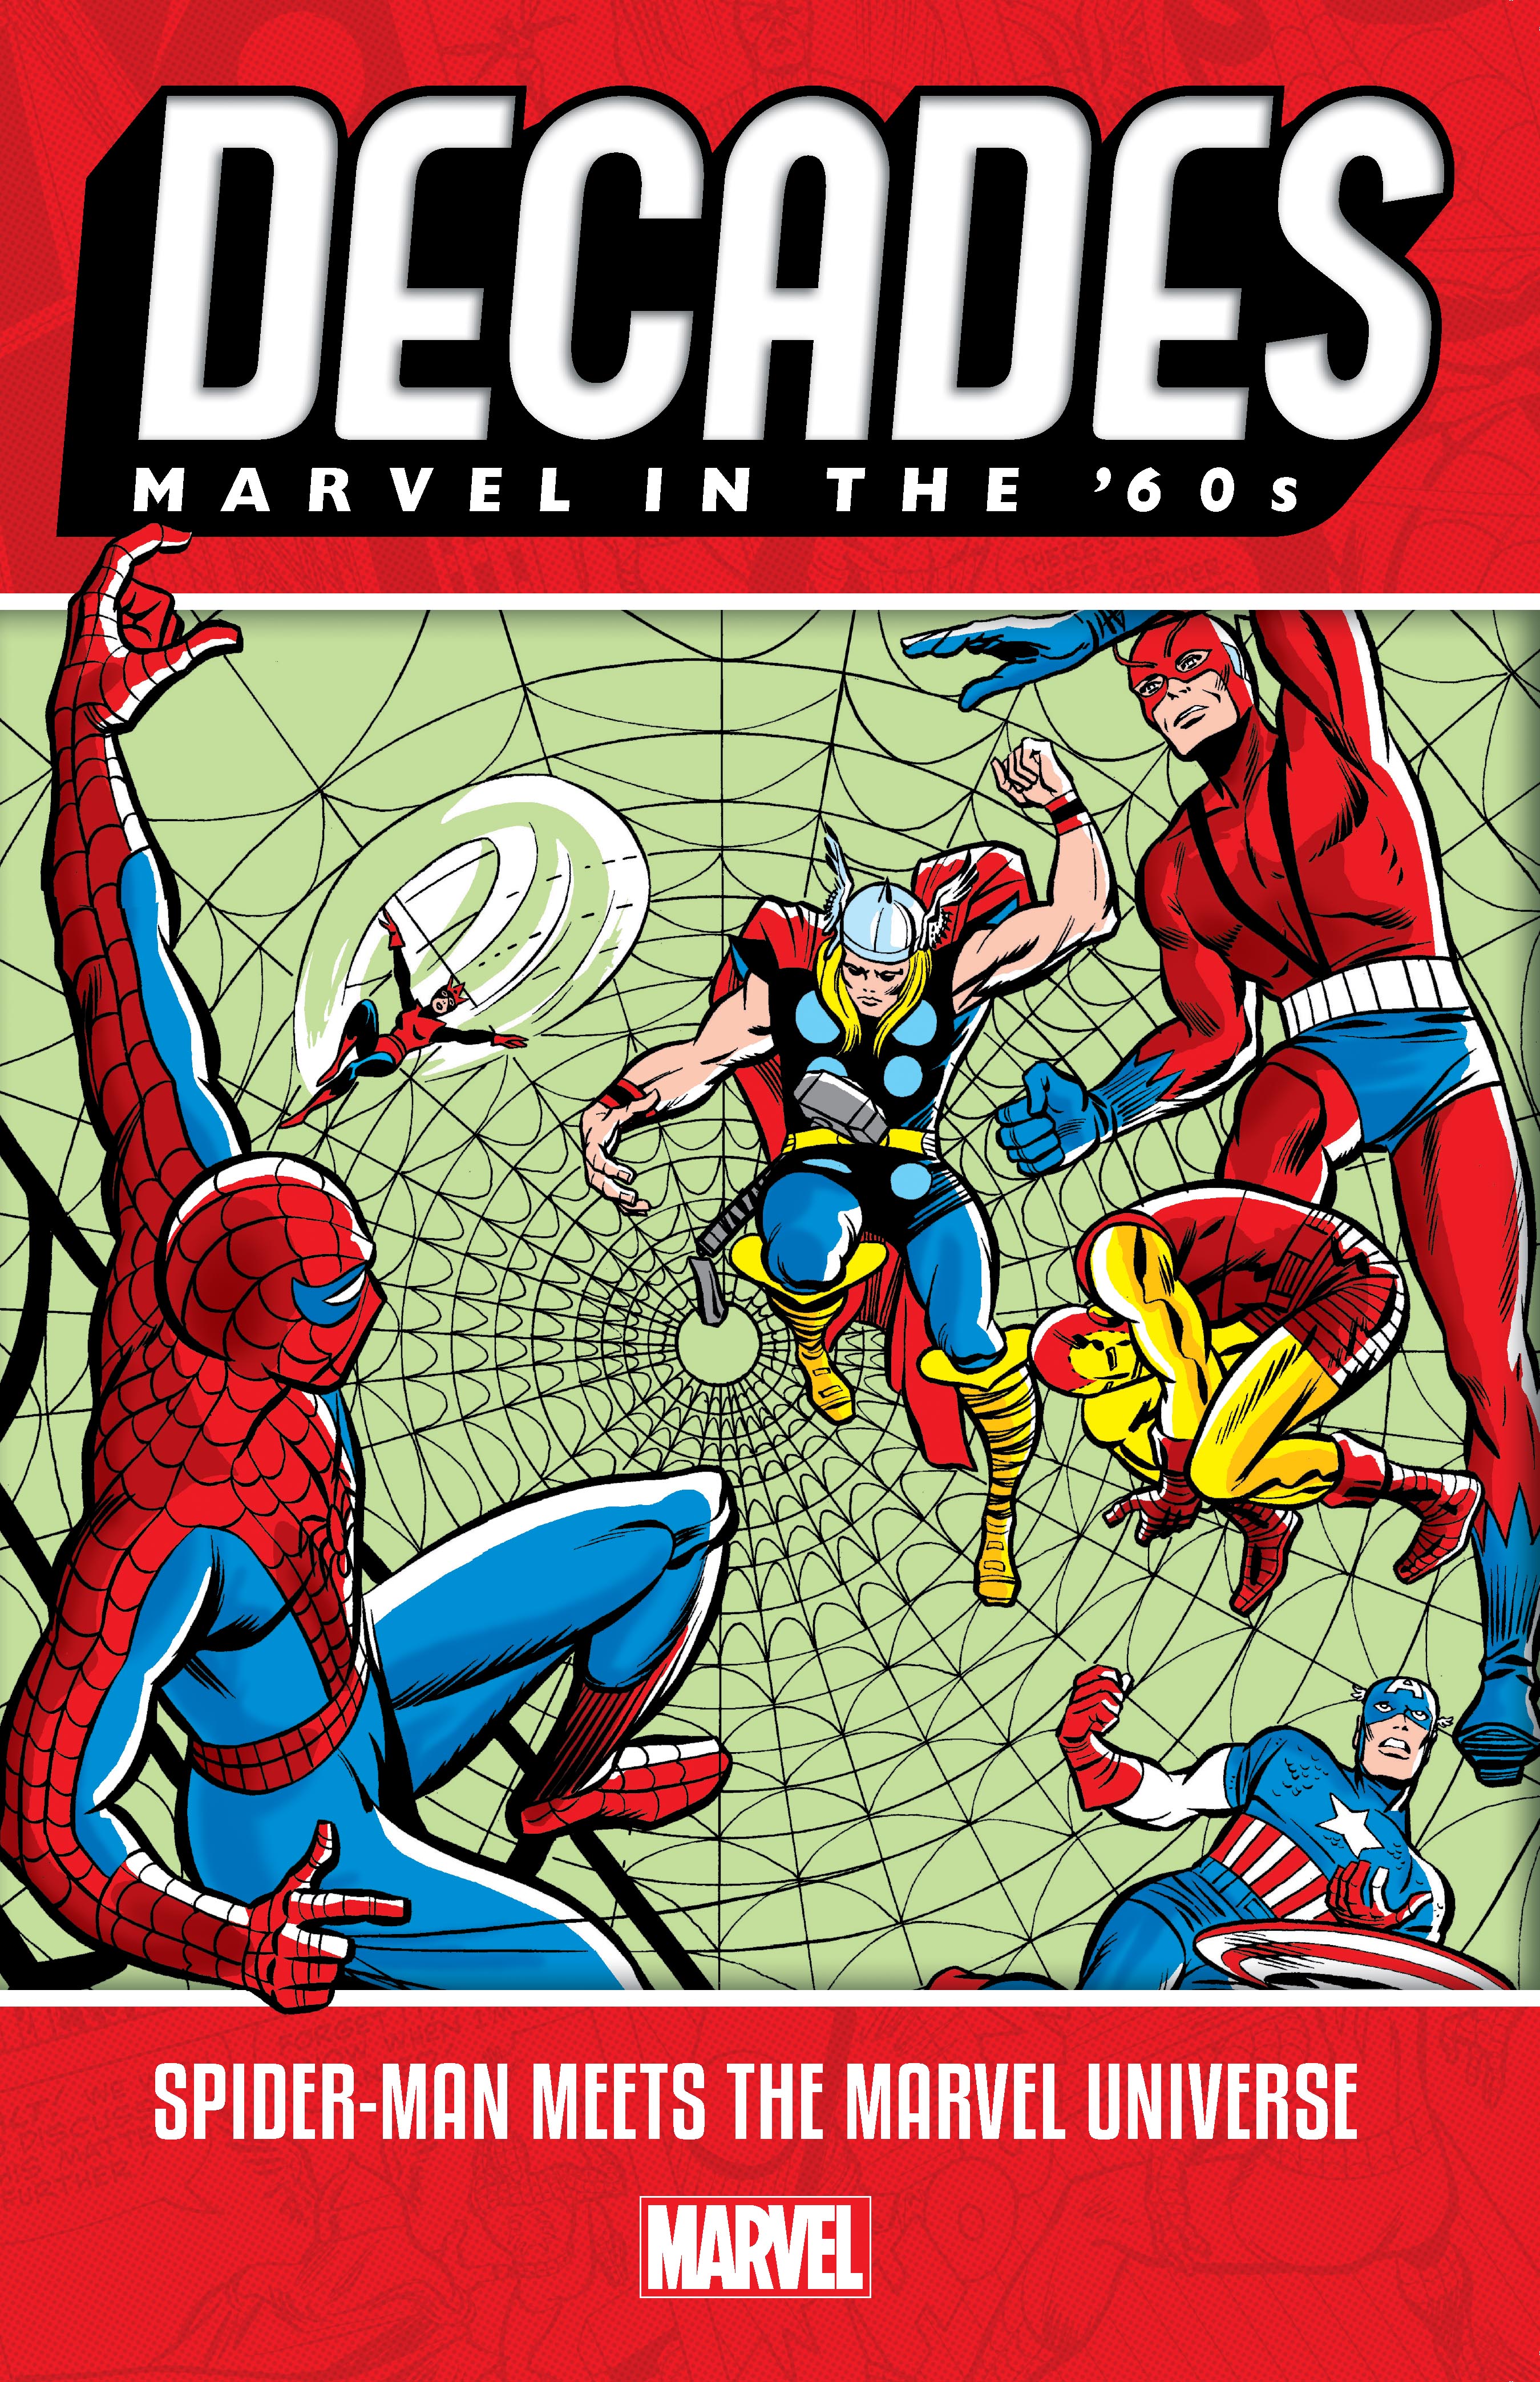 1960s Marvel Comics The Amazing Spider-Man #80 comic replica fridge magnet new 